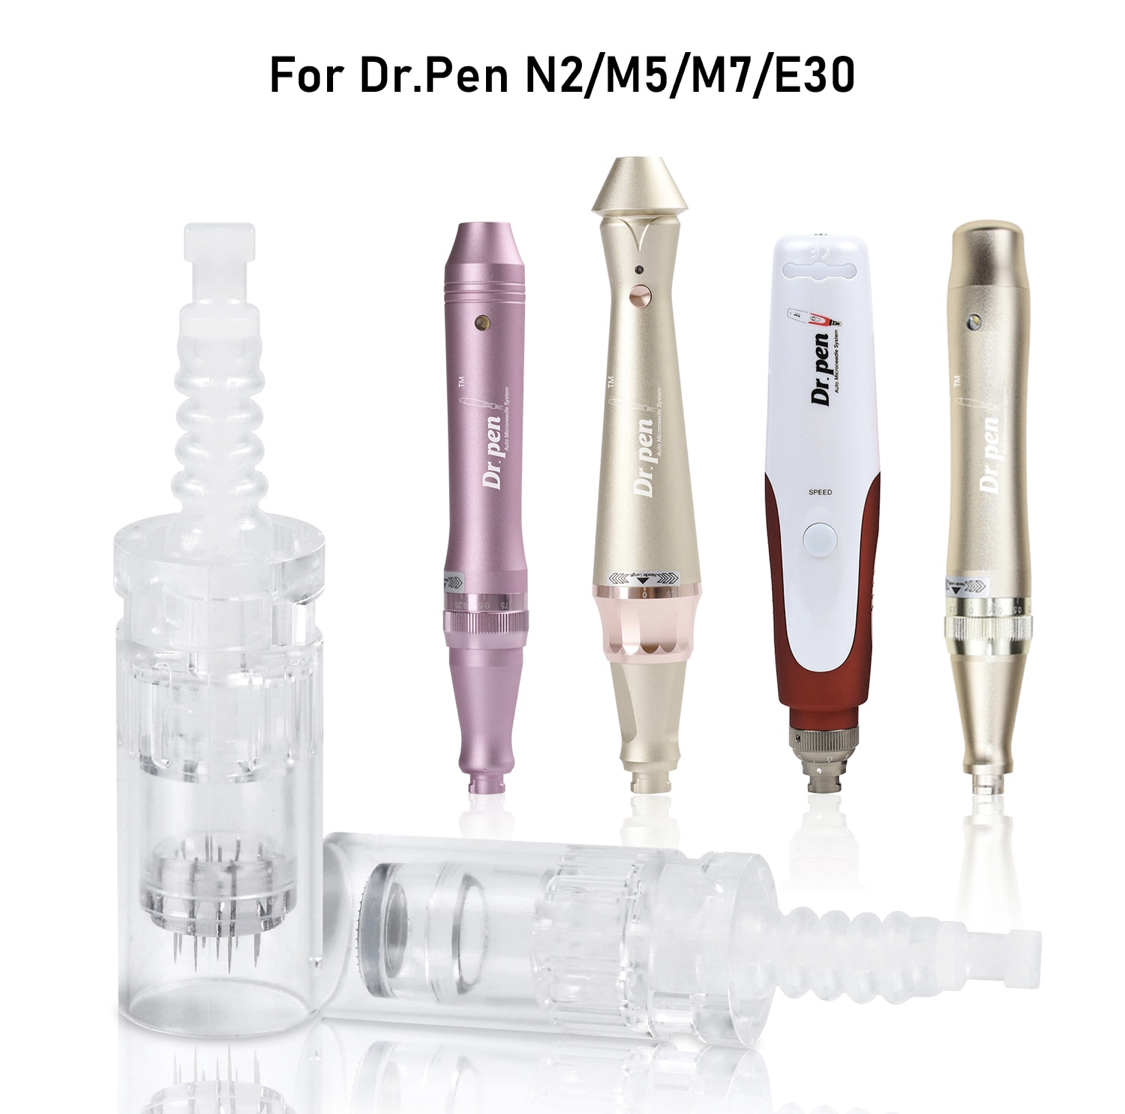 Dr. Pen A1 Microneedling Pen - Powerful Skin Rejuvenation